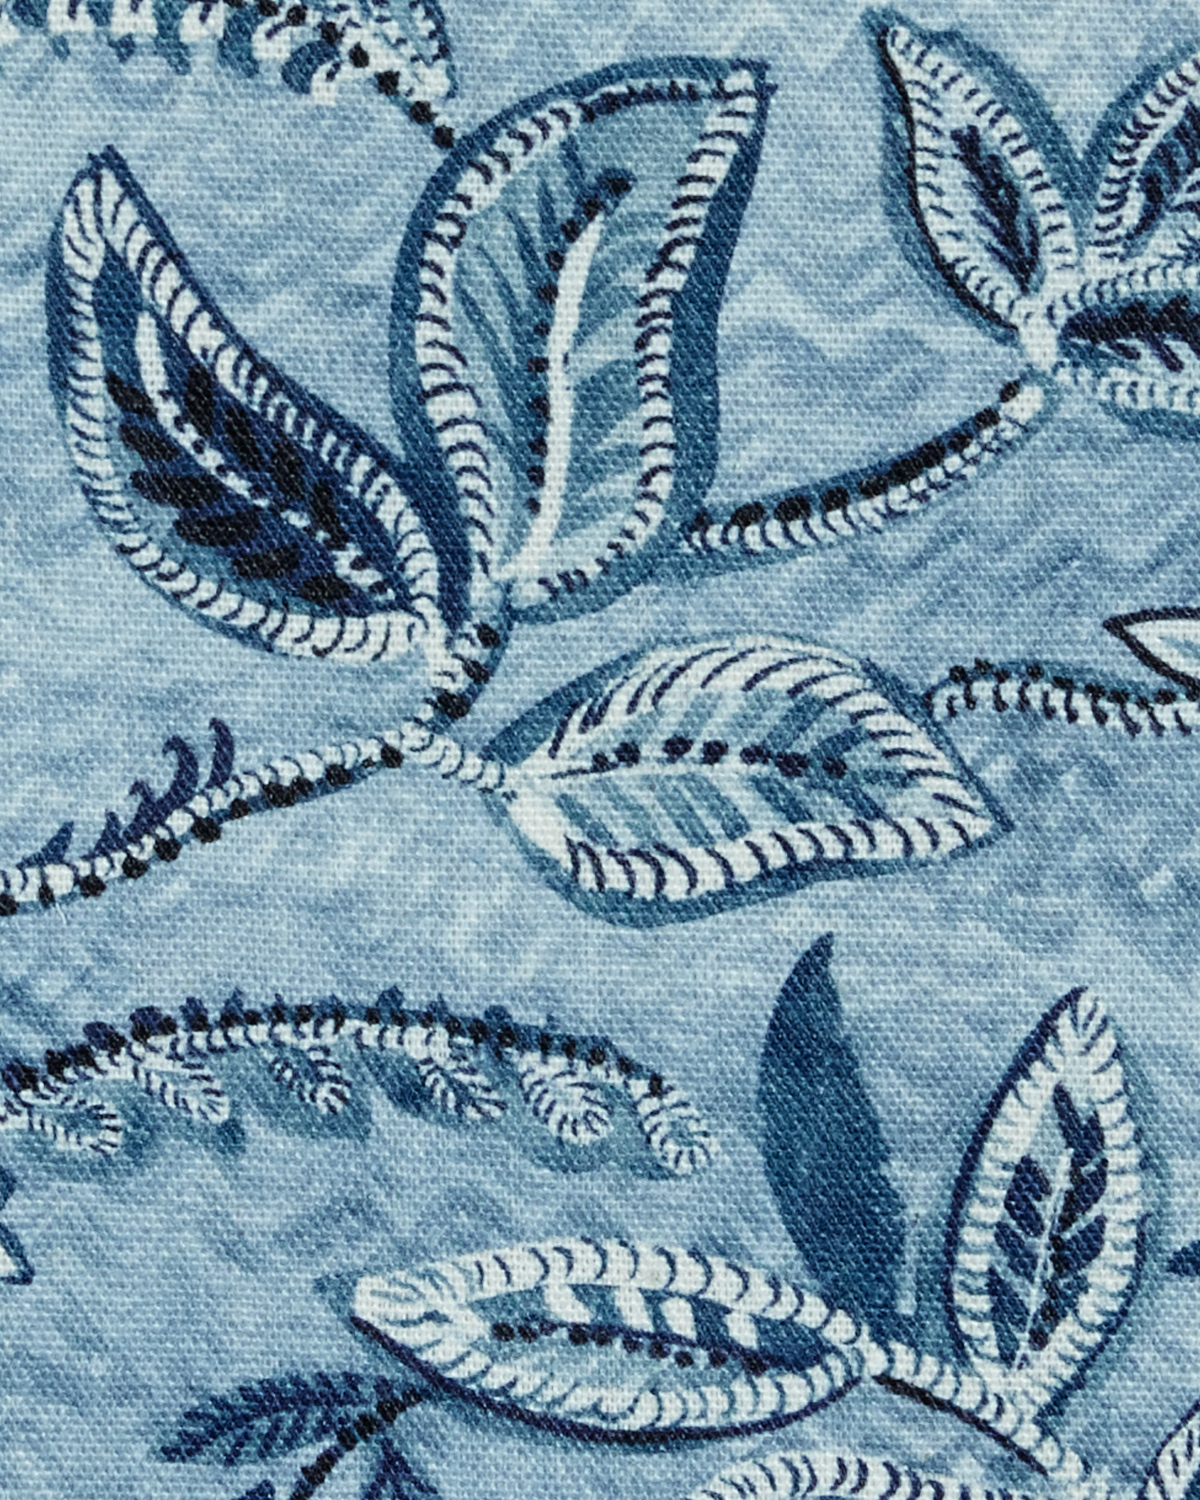 Textured Botanical Fabric in Dark Blues